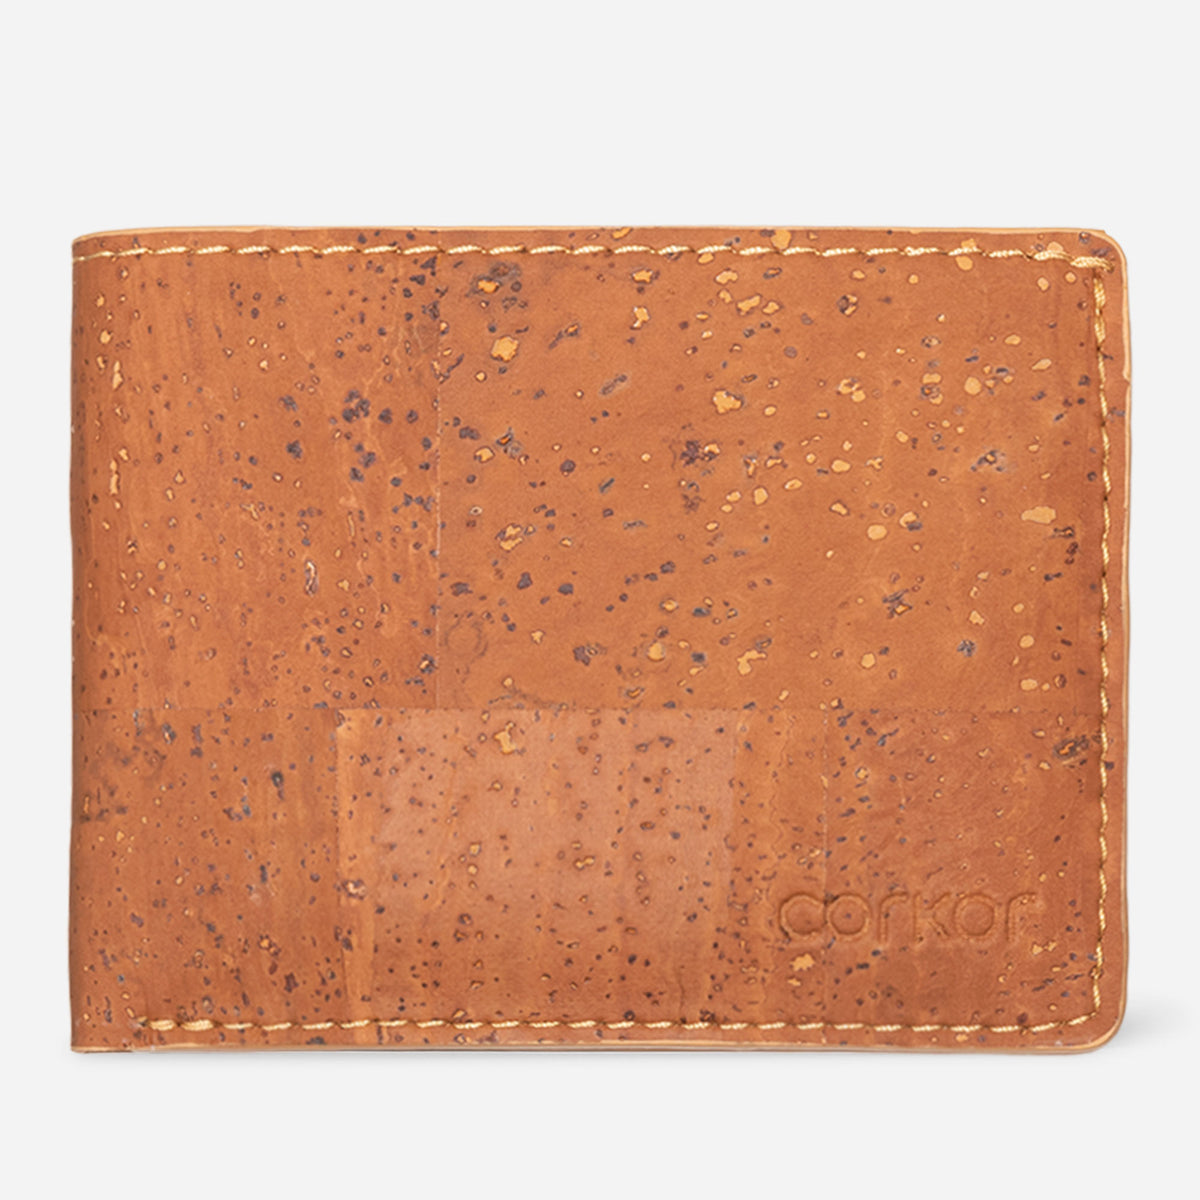 Corkor Vegan Cork Minimalist Wallet, Dark Brown